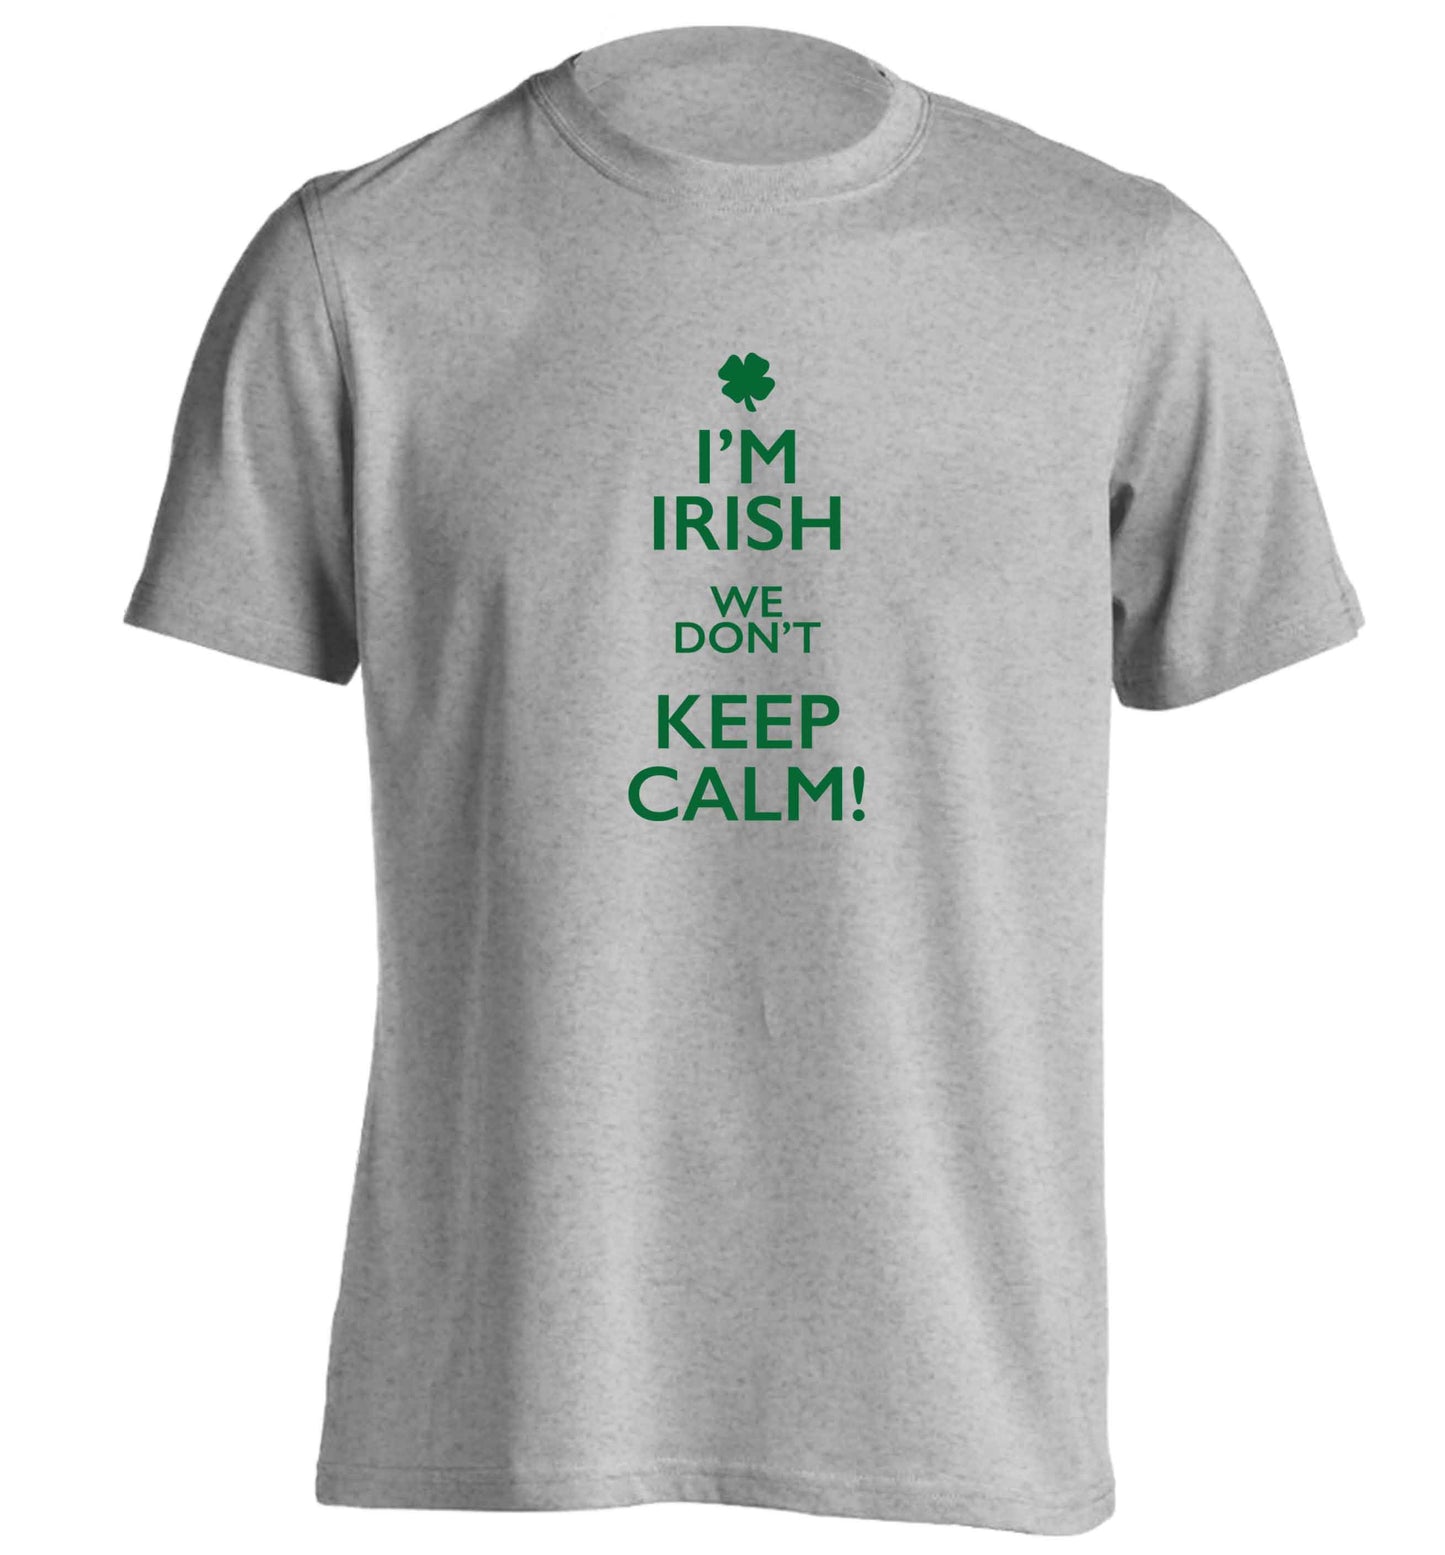 I'm Irish we don't keep calm adults unisex grey Tshirt 2XL